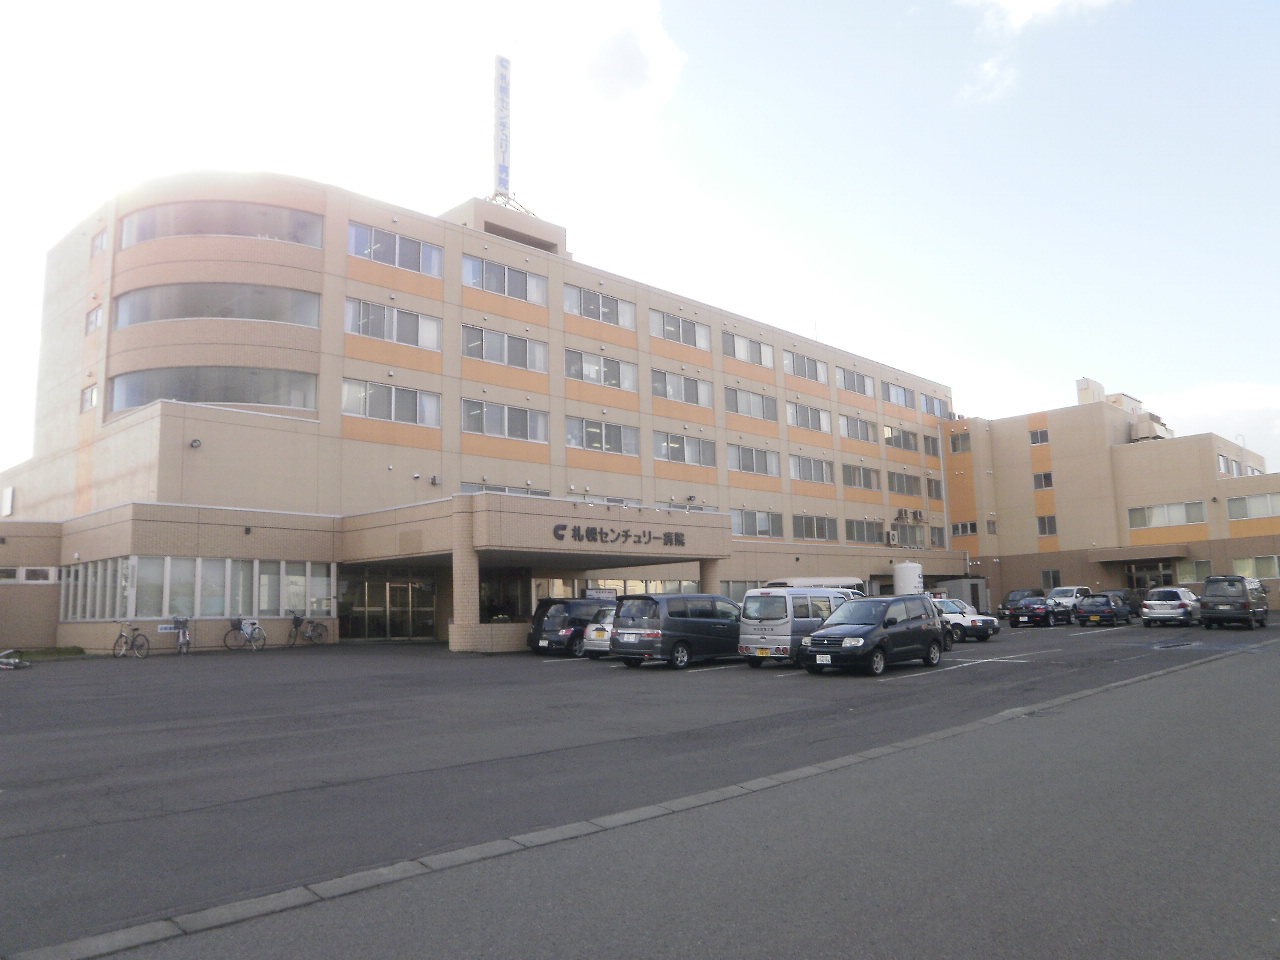 Hospital. 469m until the medical corporation Kikusatokai Sapporo Century Hospital (Hospital)